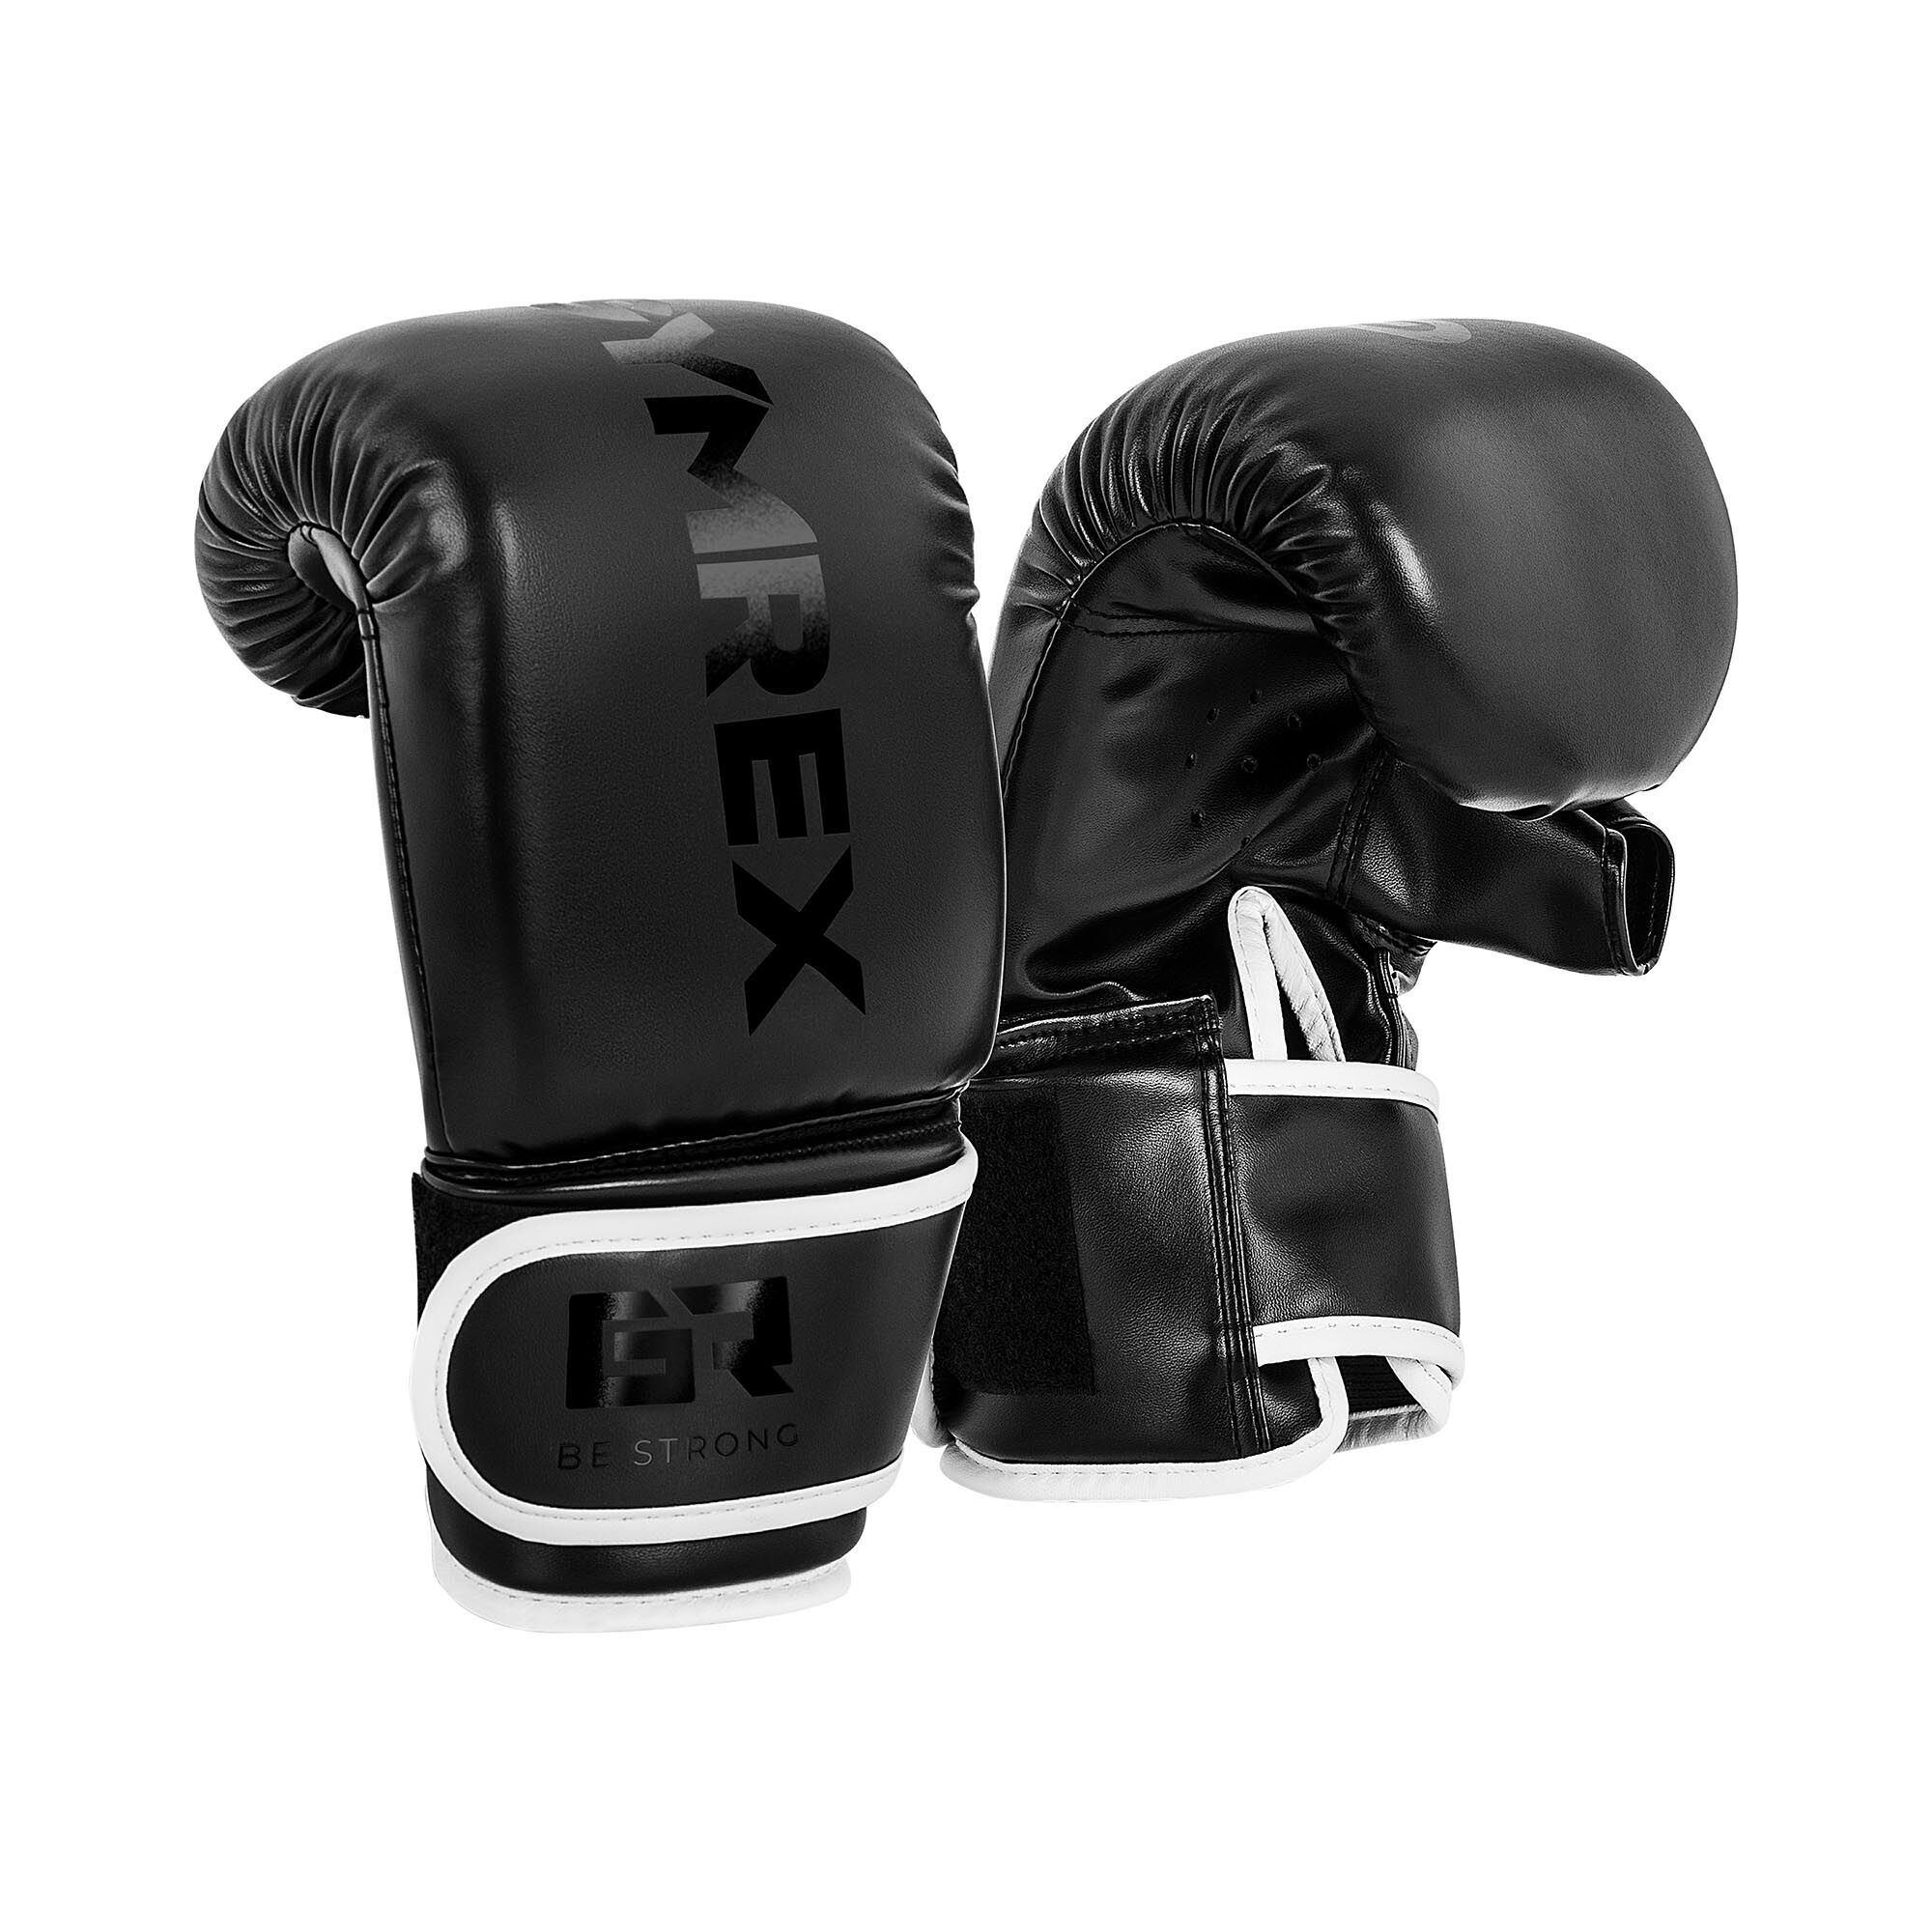 Gymrex Boxing Bag Gloves - 12 oz - black GR-BG 12PB